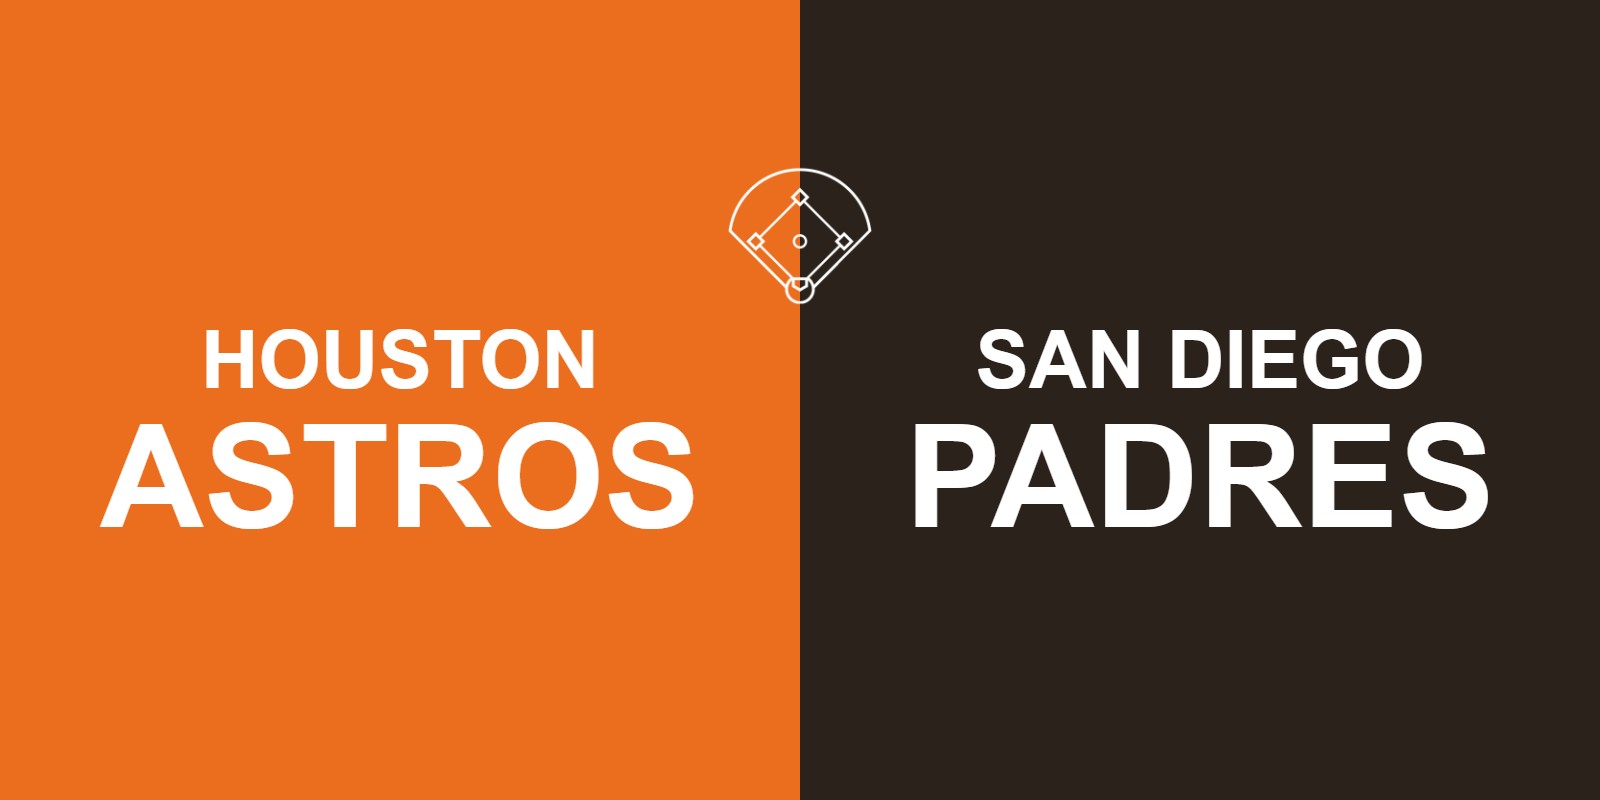 Astros vs Padres